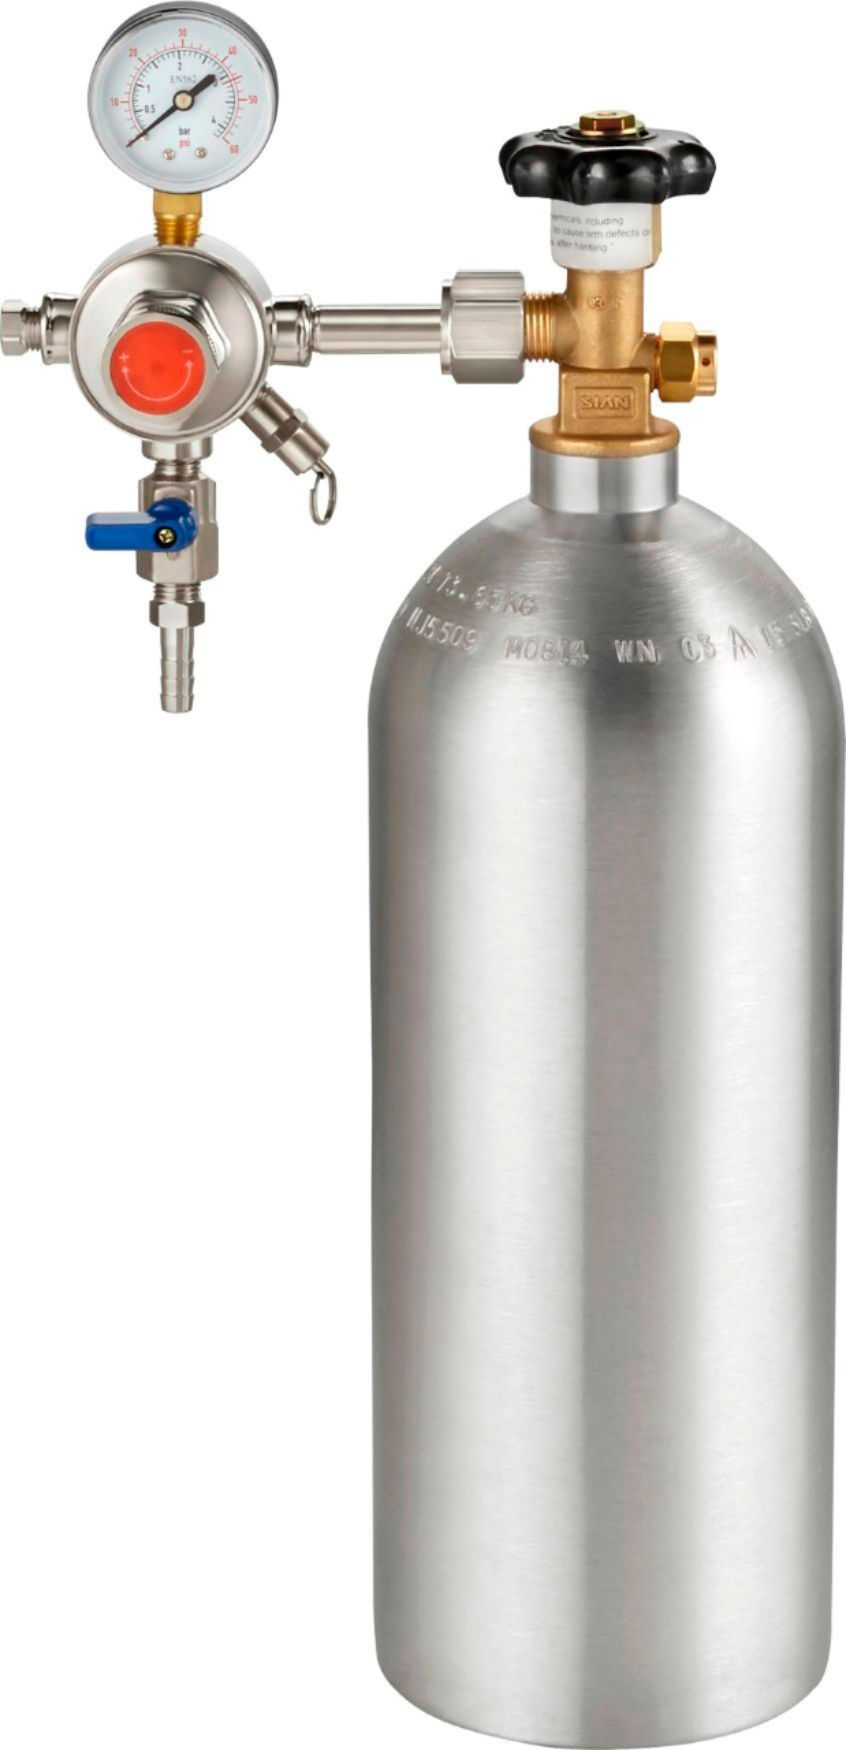 Insignia™ - 5.6 Cu. Ft. 1-Tap Beverage Cooler Kegerator - Stainless steel